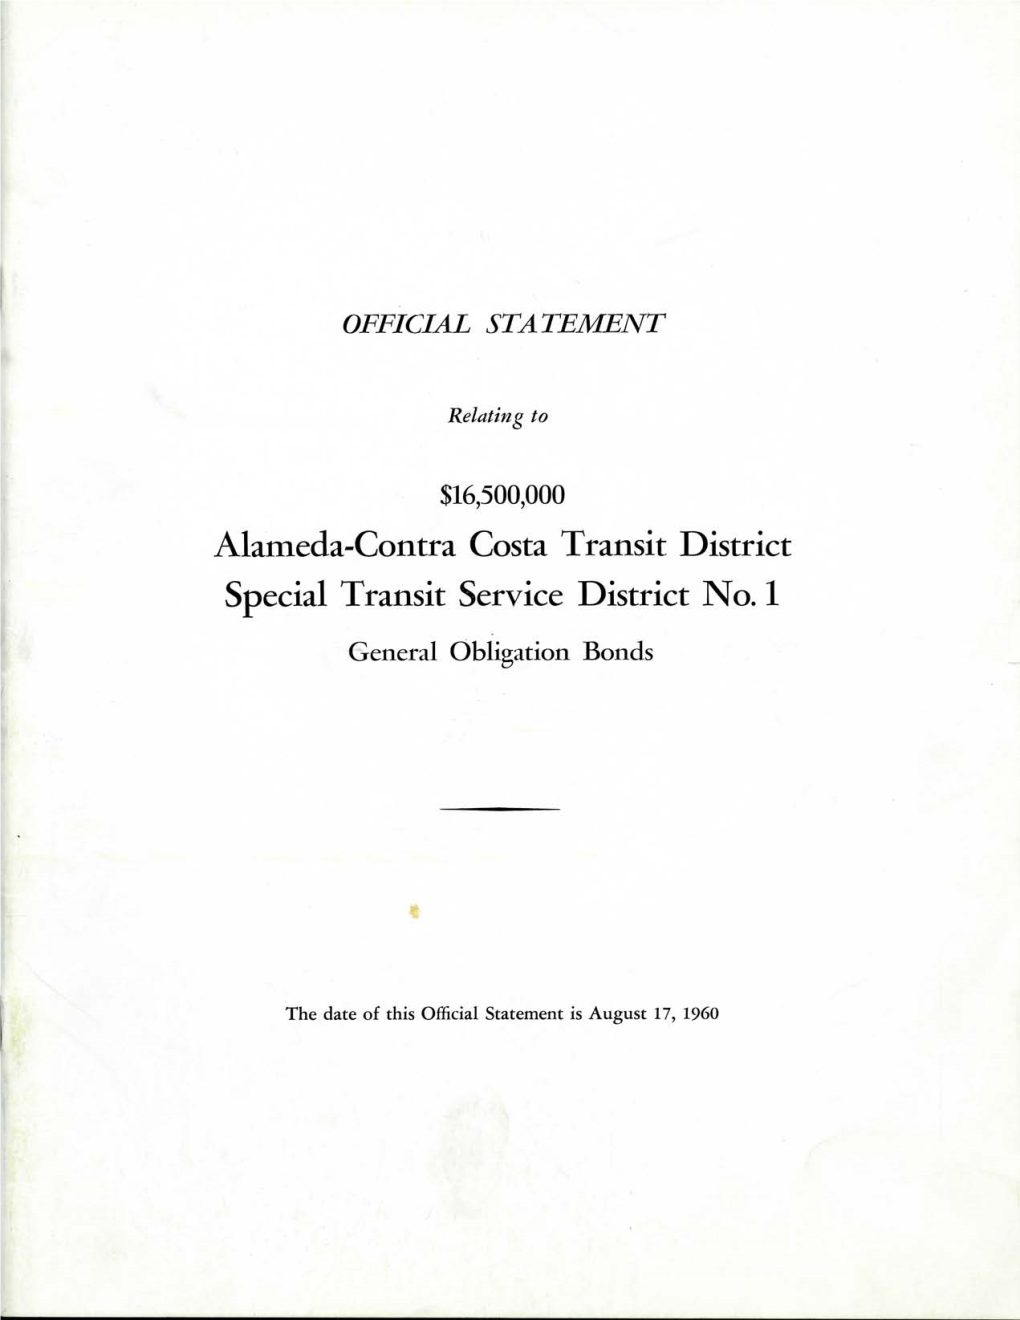 Alameda-Contra Costa Transit District Special Transit Service District No.1